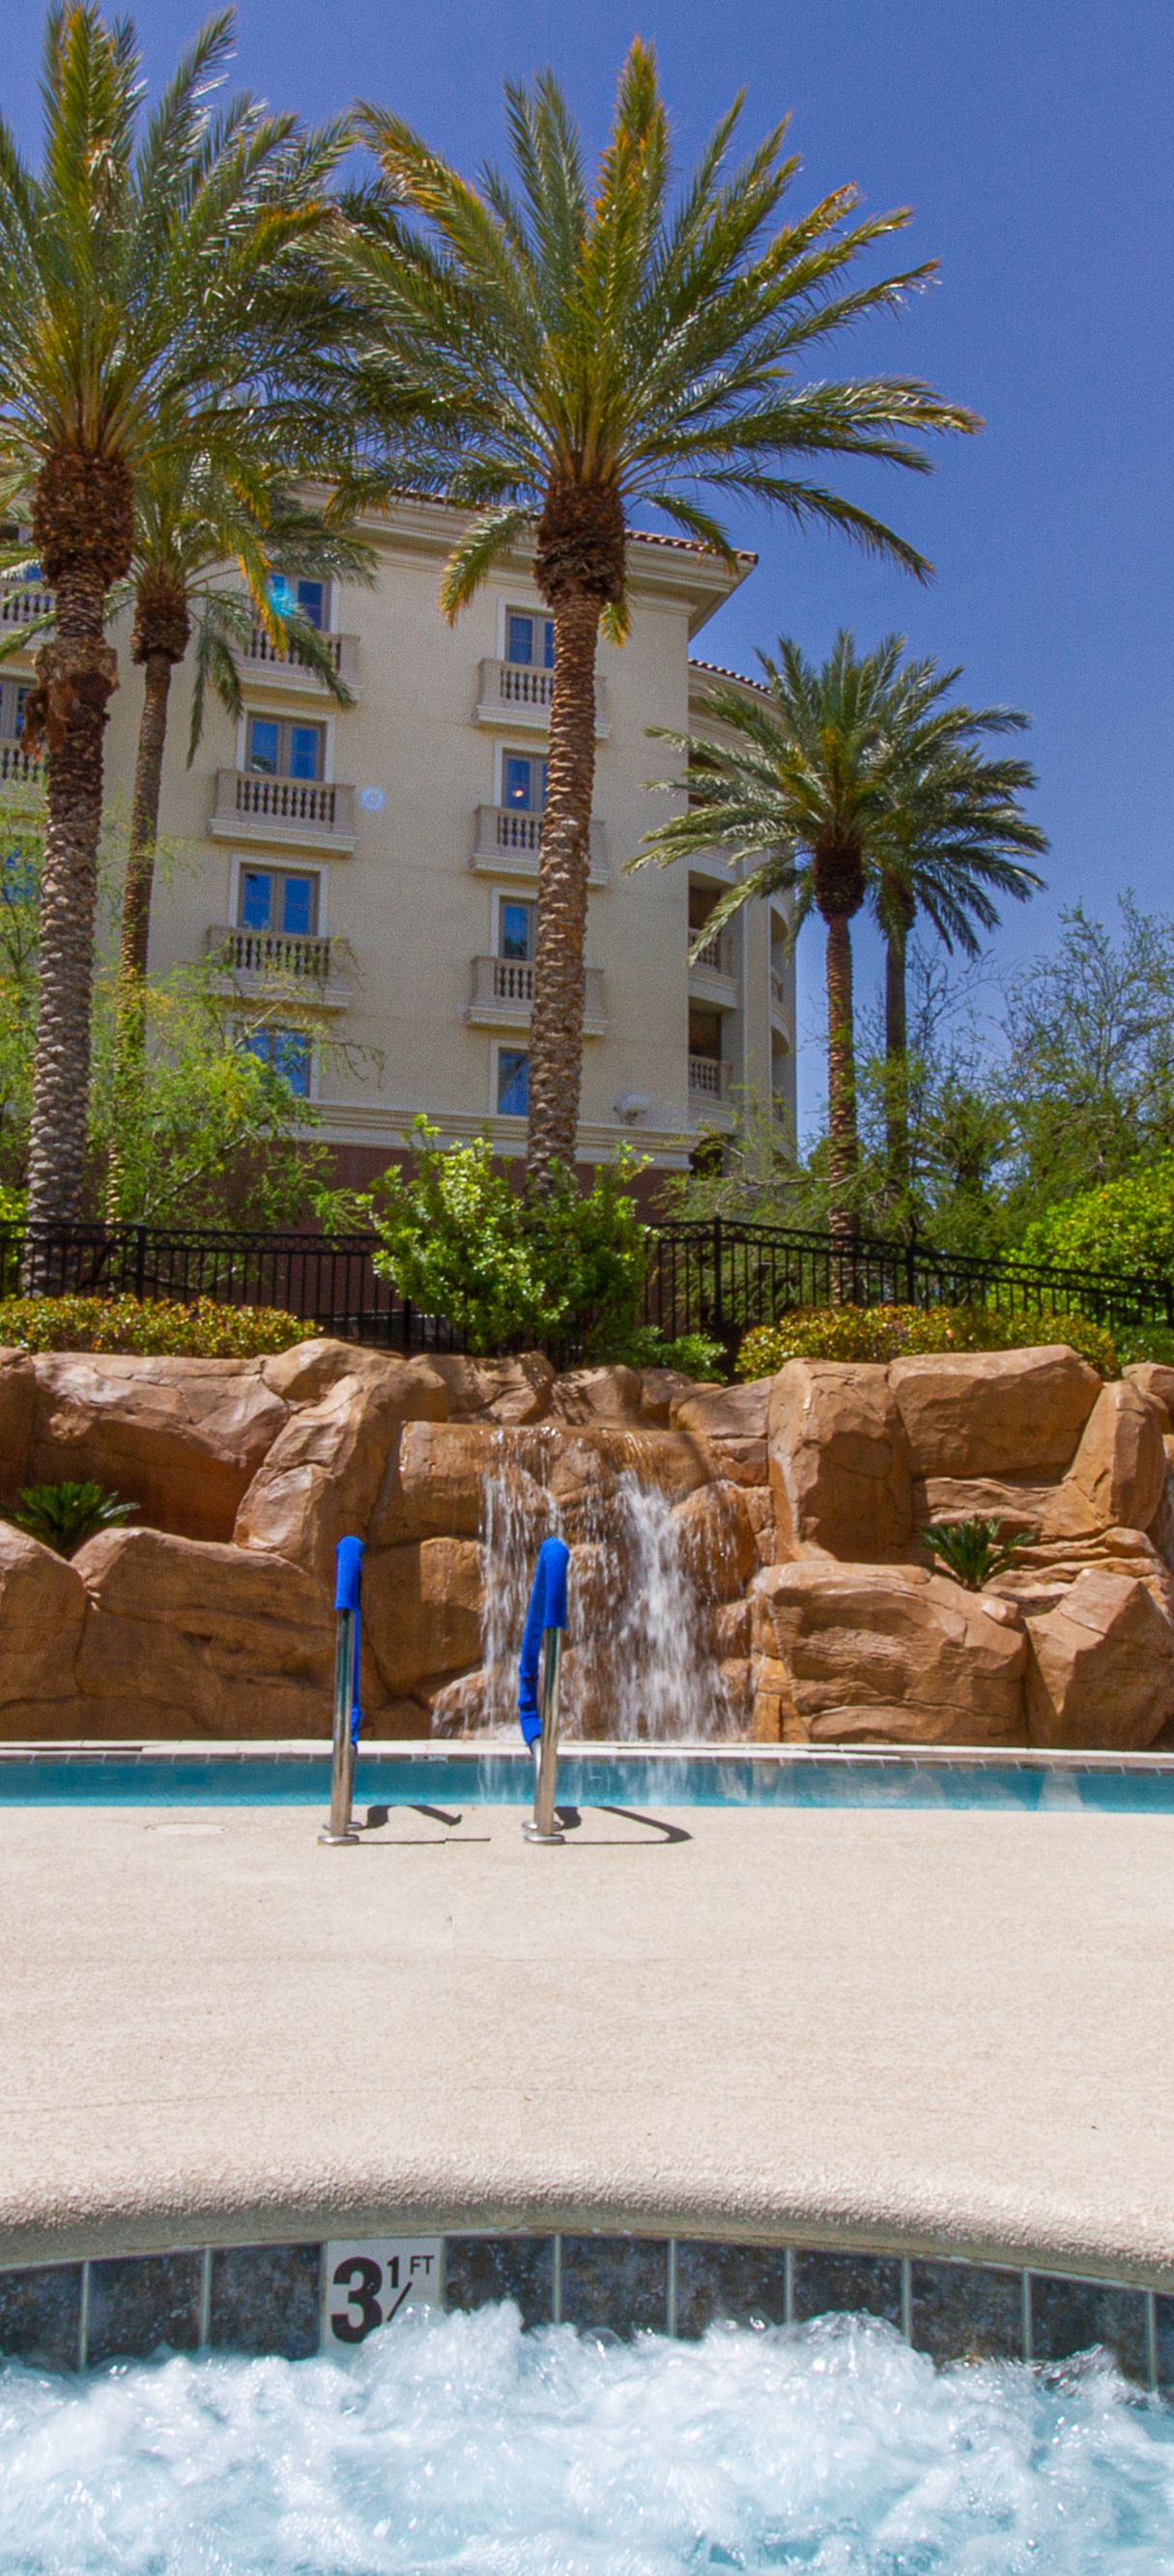 JW Marriott Las Vegas Resort & Spa Gym Pictures & Reviews